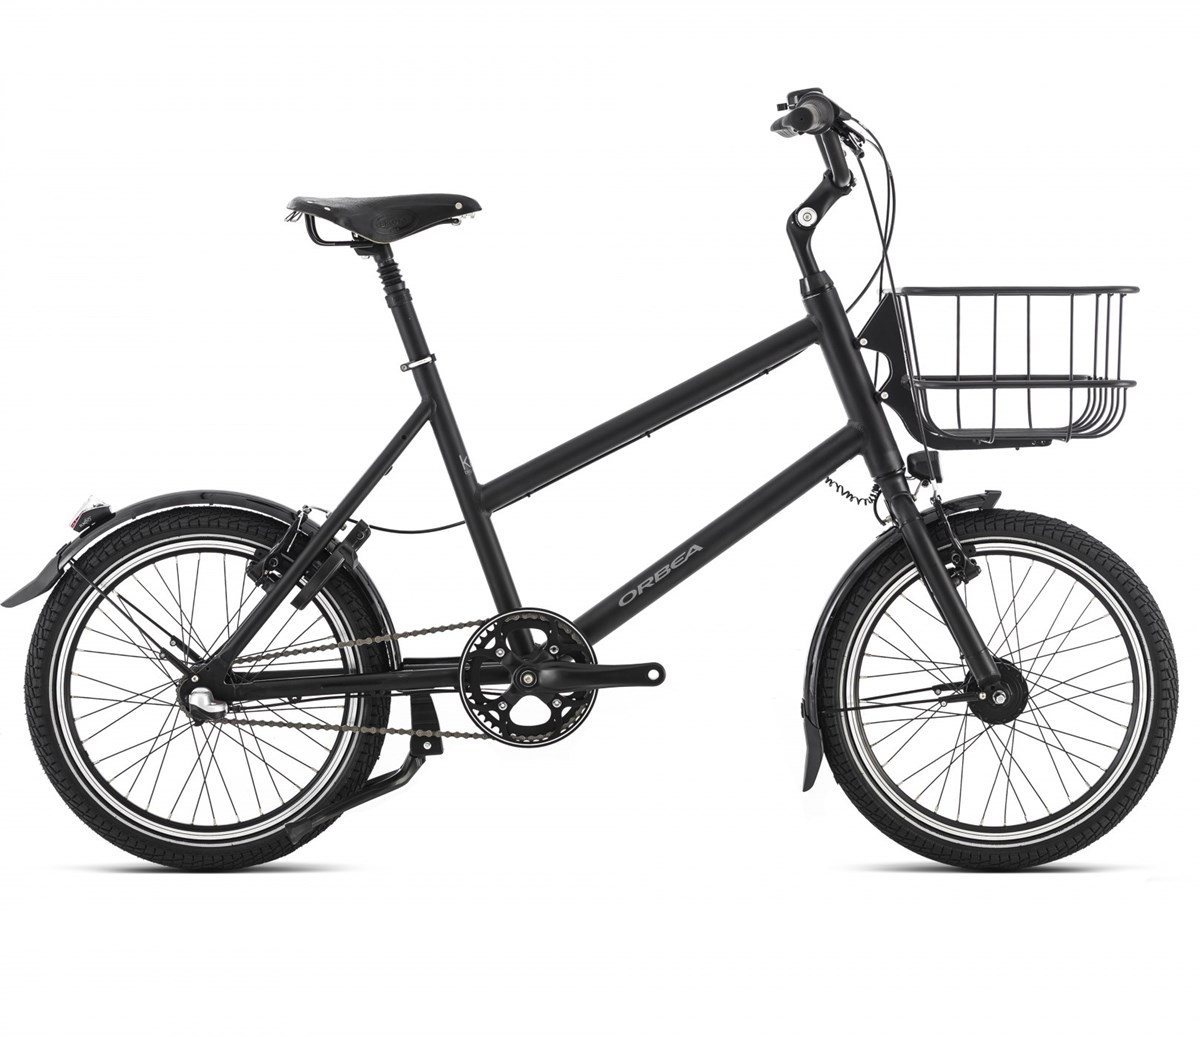 Orbea Katu 10 2016 - Hybrid Sports Bike product image